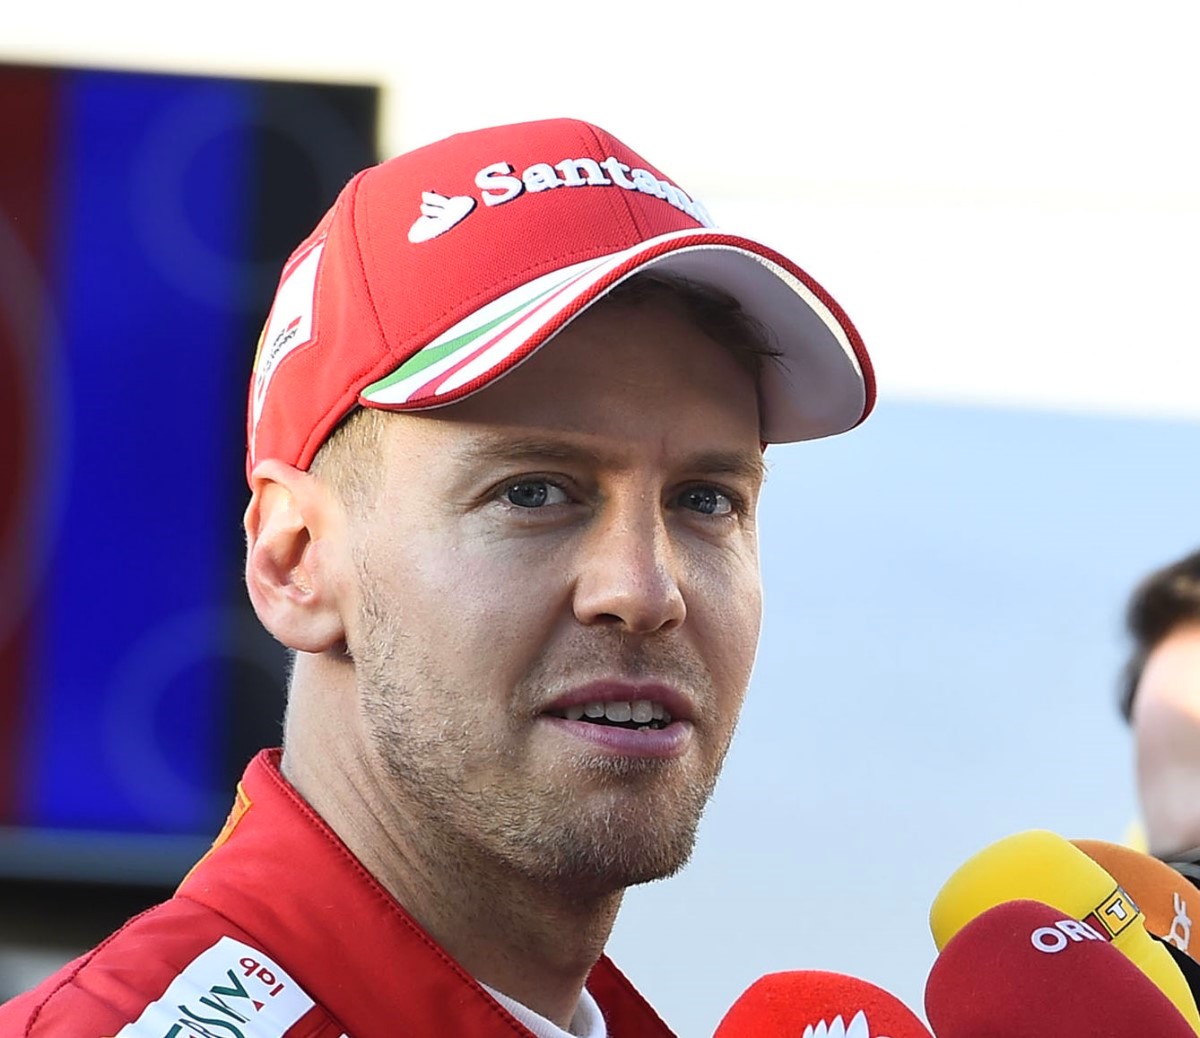 Like Schumacher before him, Vettel is helping to rebuild Ferrari